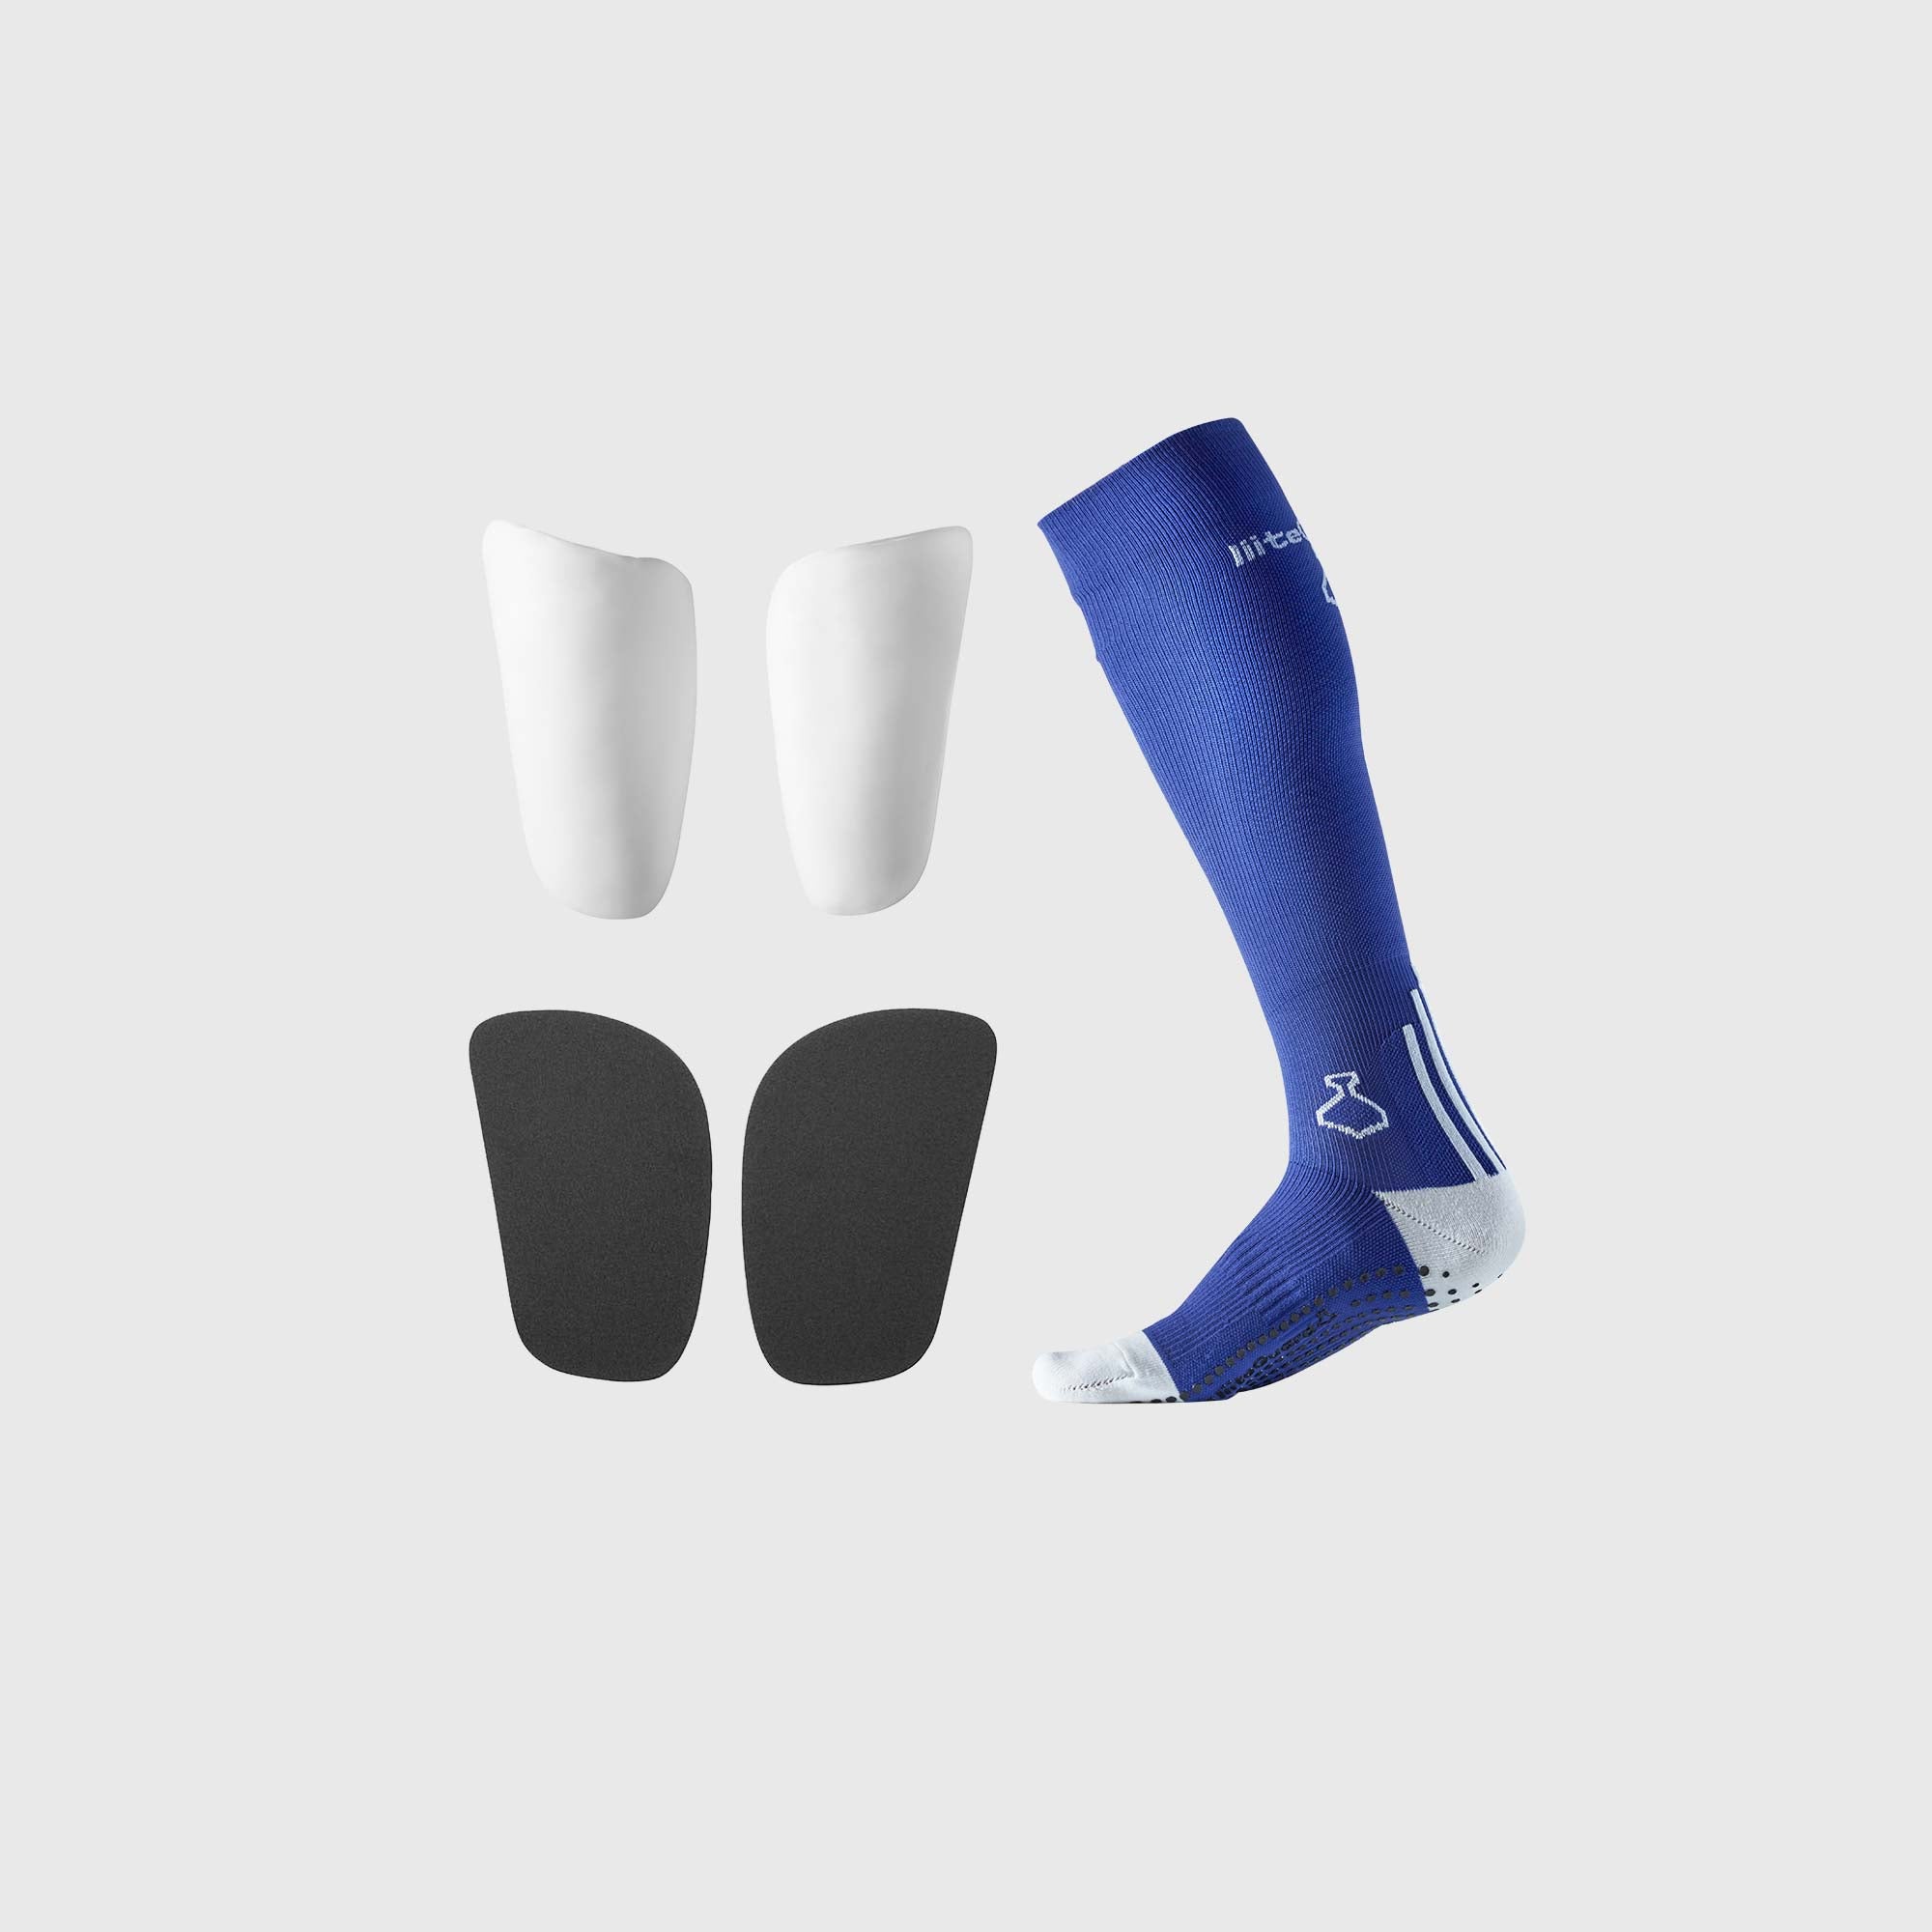 Liiteguard PERFORMANCE KIT Long socks BLUE